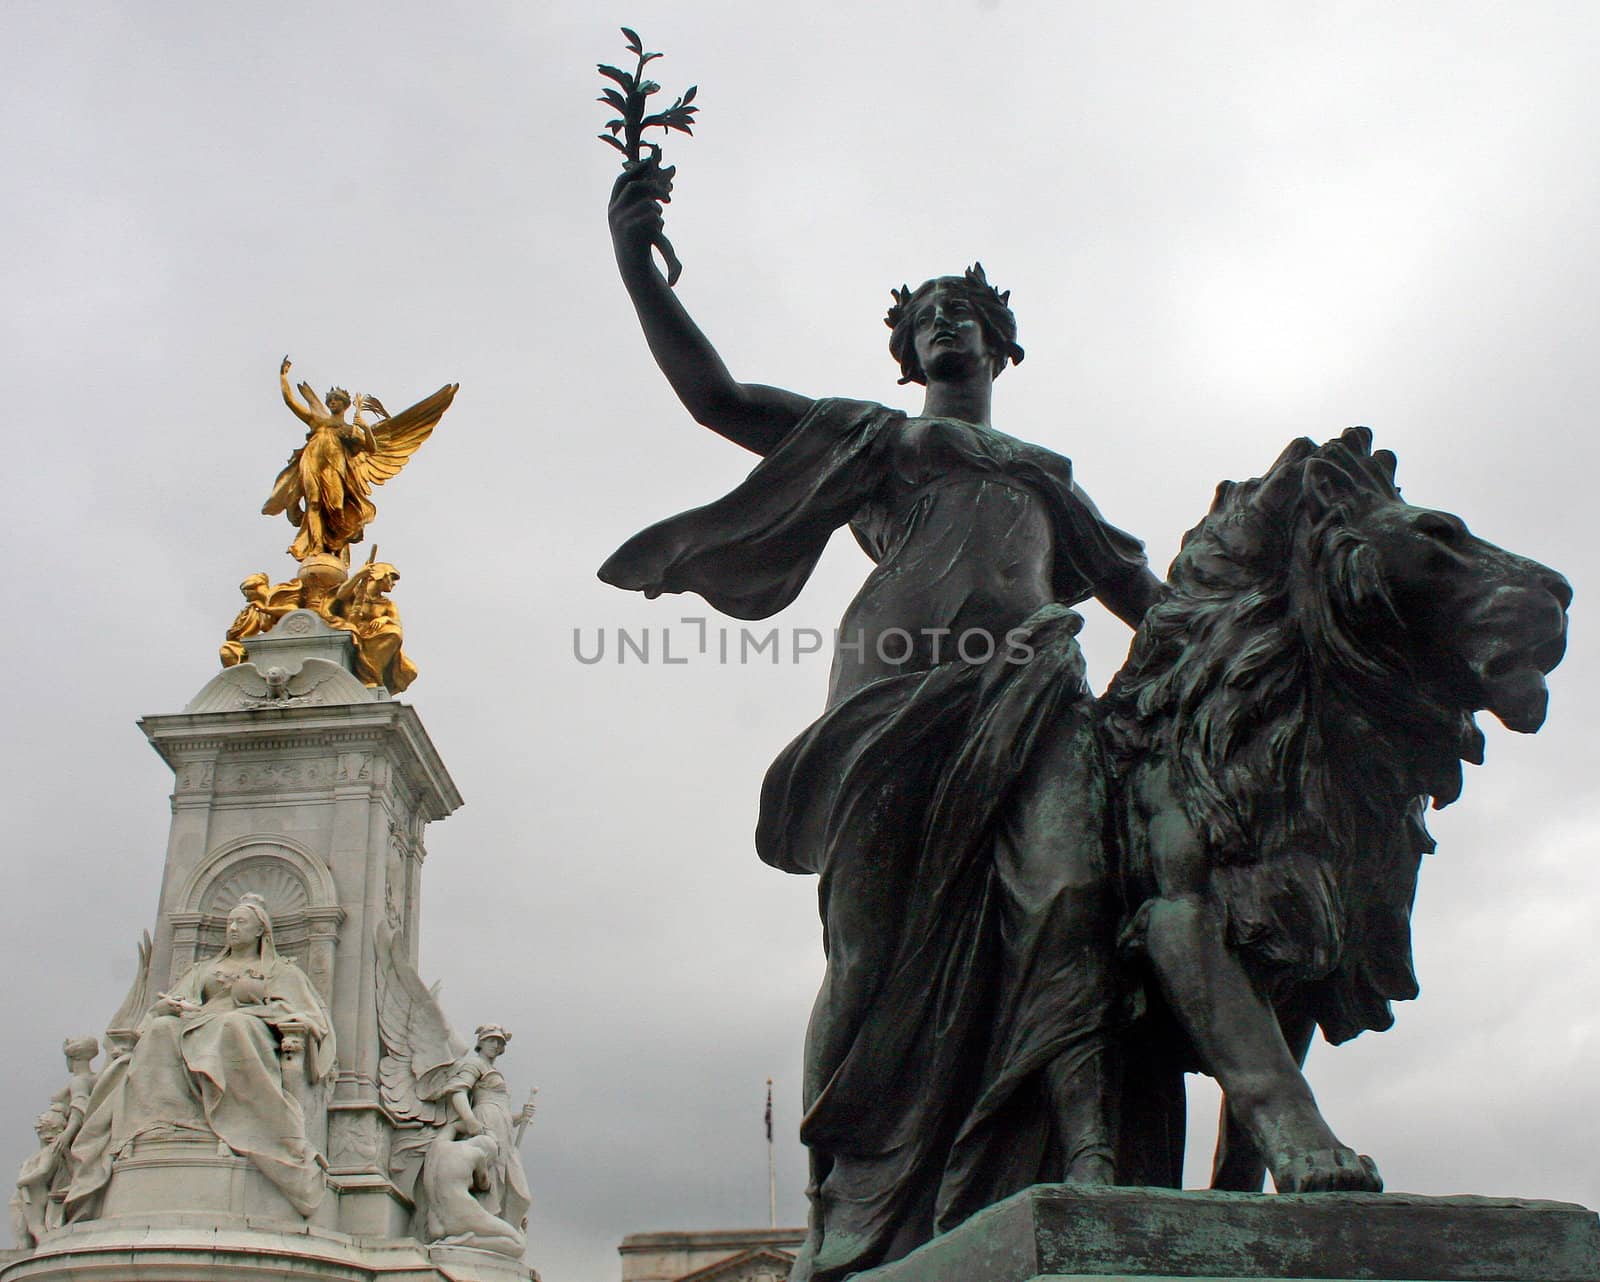 Two Statues in London, UK.